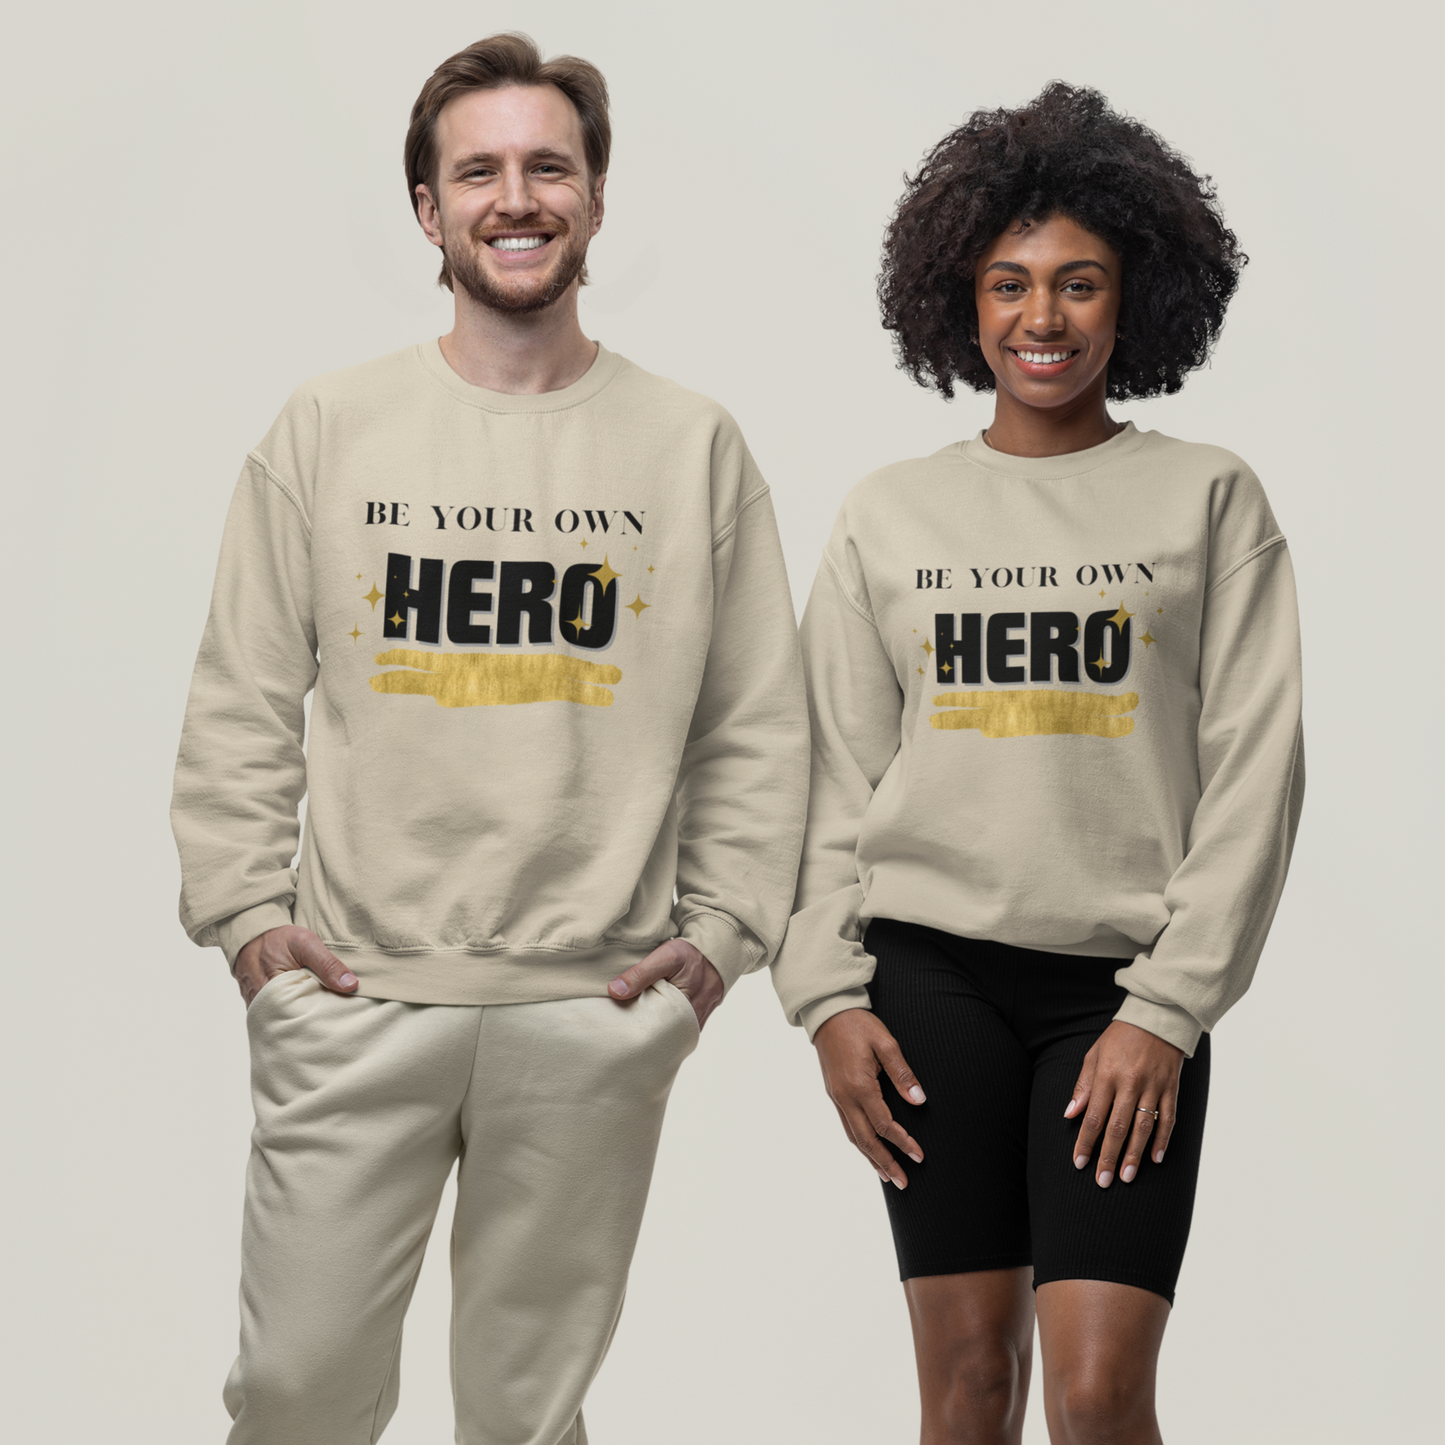 "Be Your Own Hero" - Sweatshirt Unisex